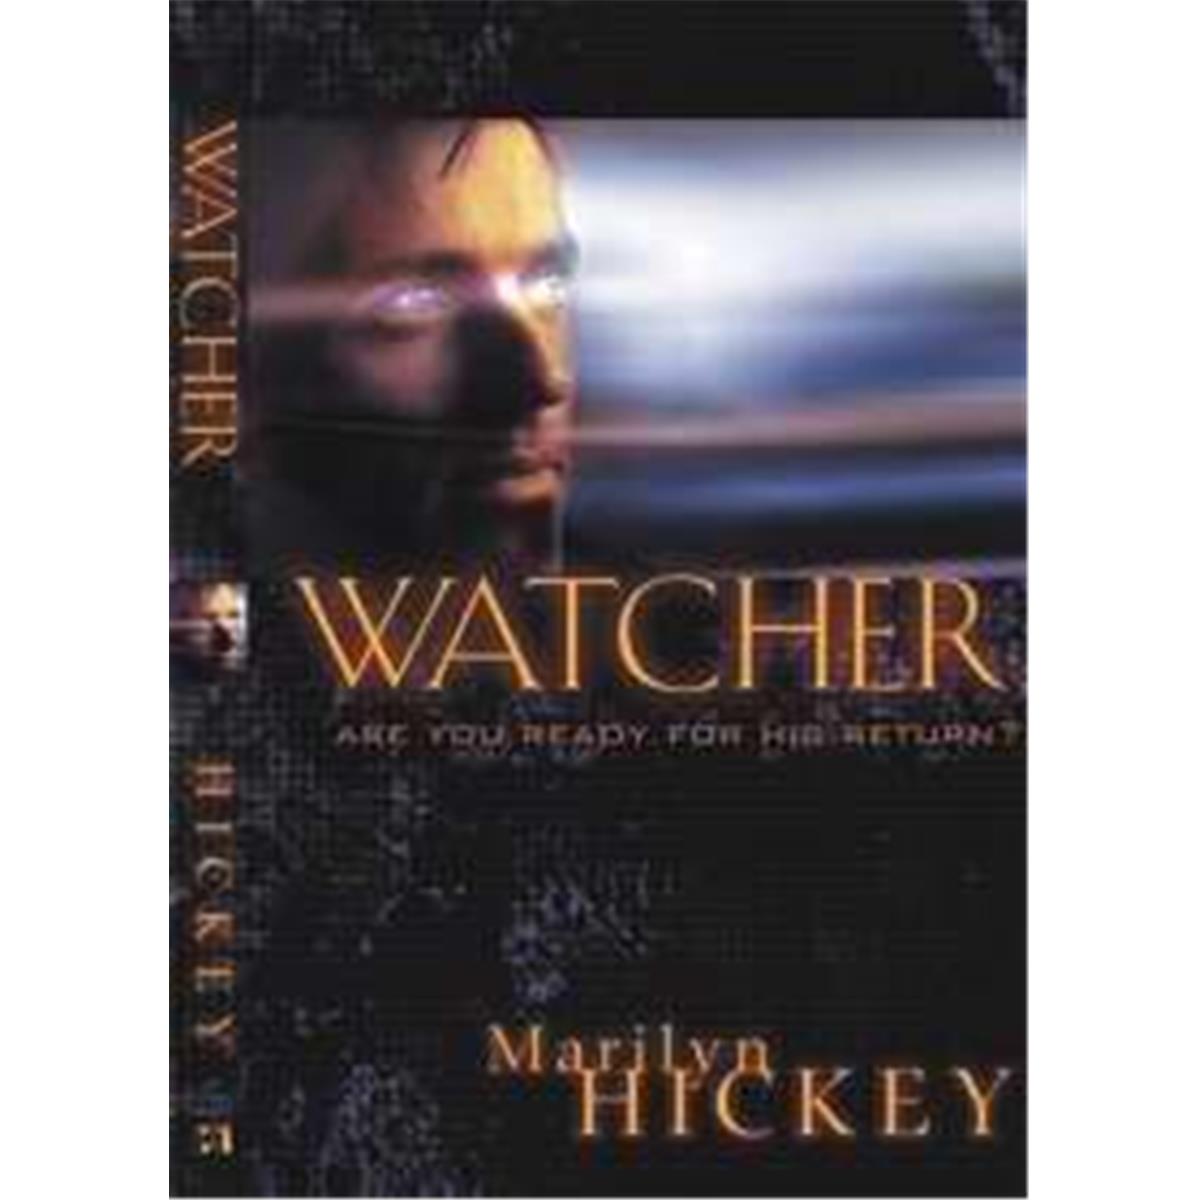 275611 Watcher By Hickey Marilyn